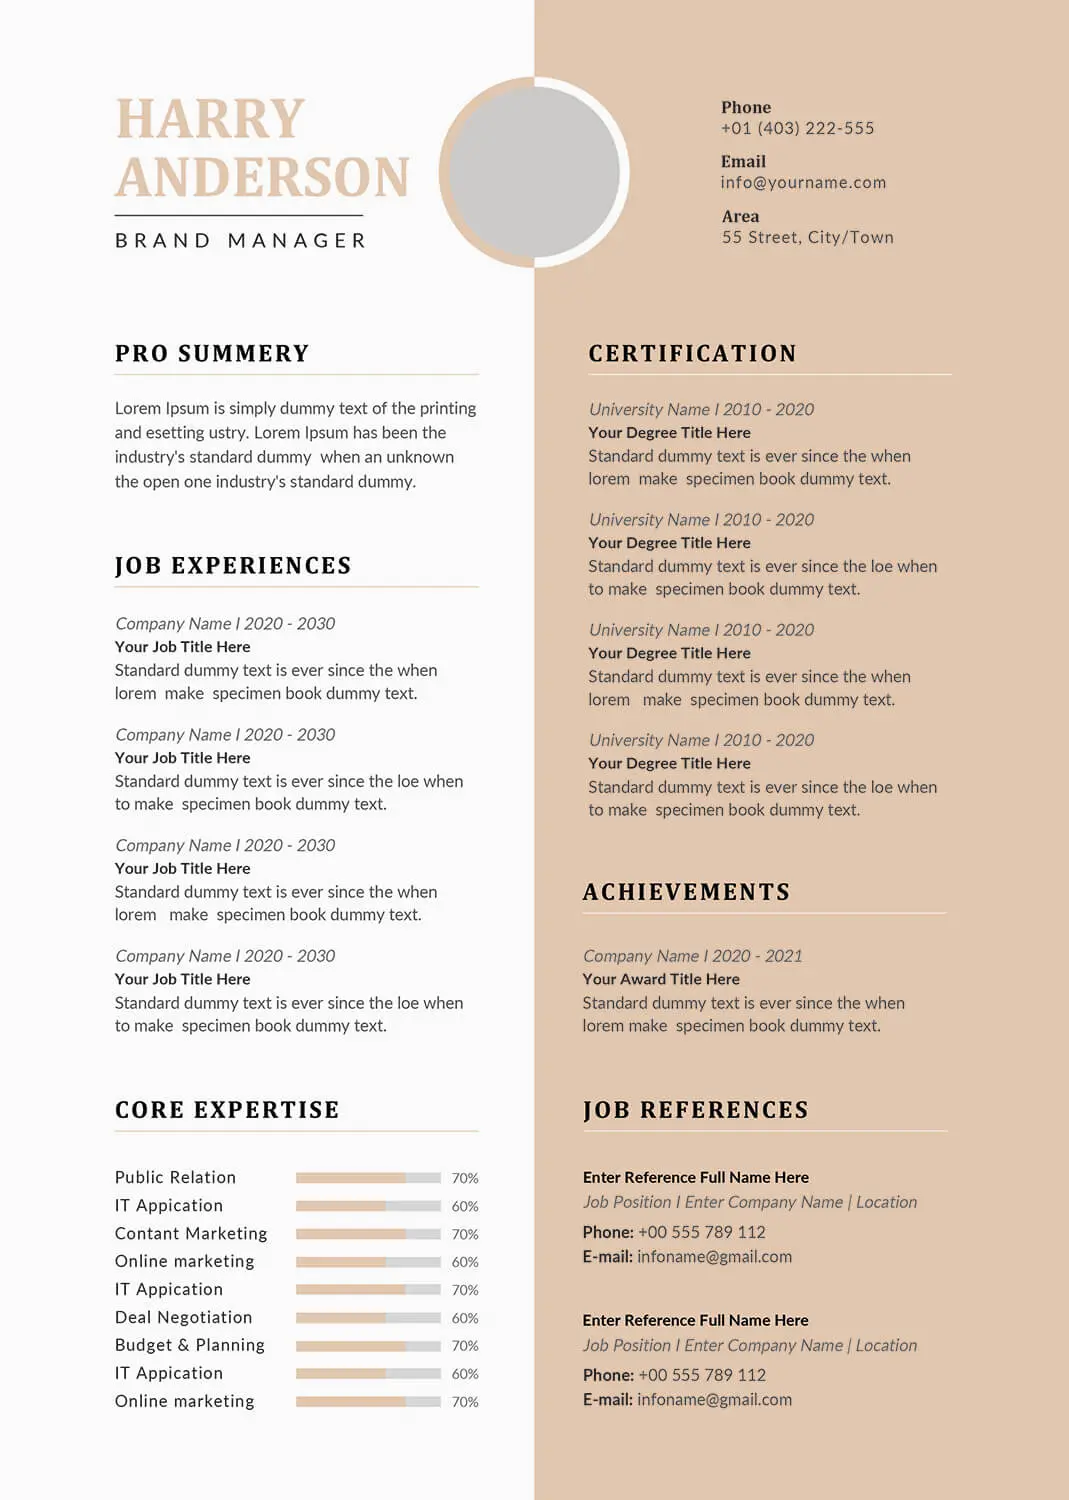 pharmacist-resume